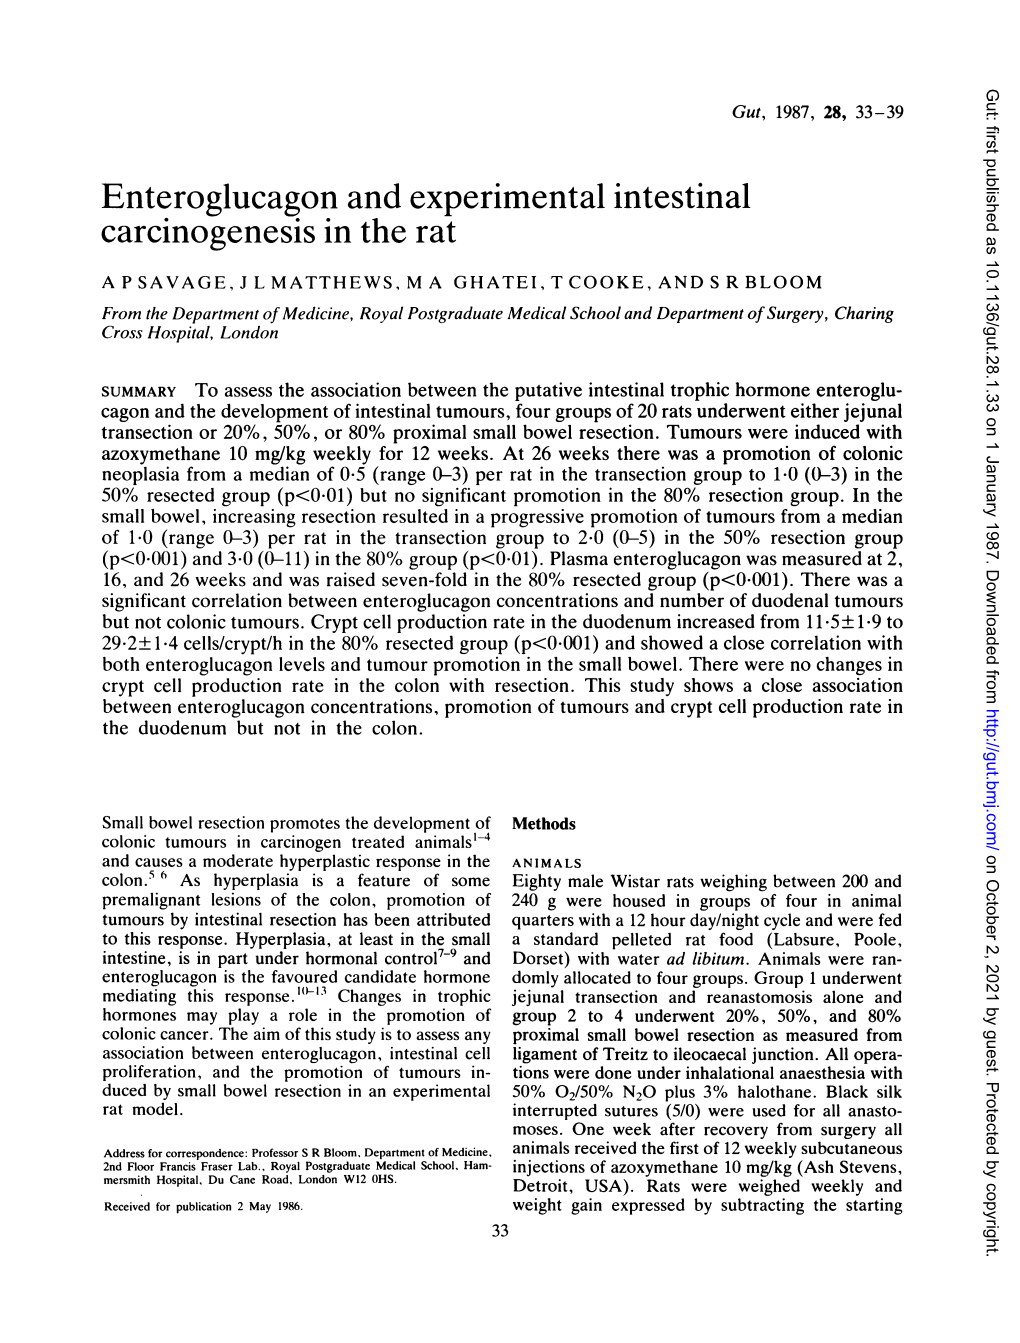 Enteroglucagon and Experimental Intestinal Carcinogenesis in the Rat